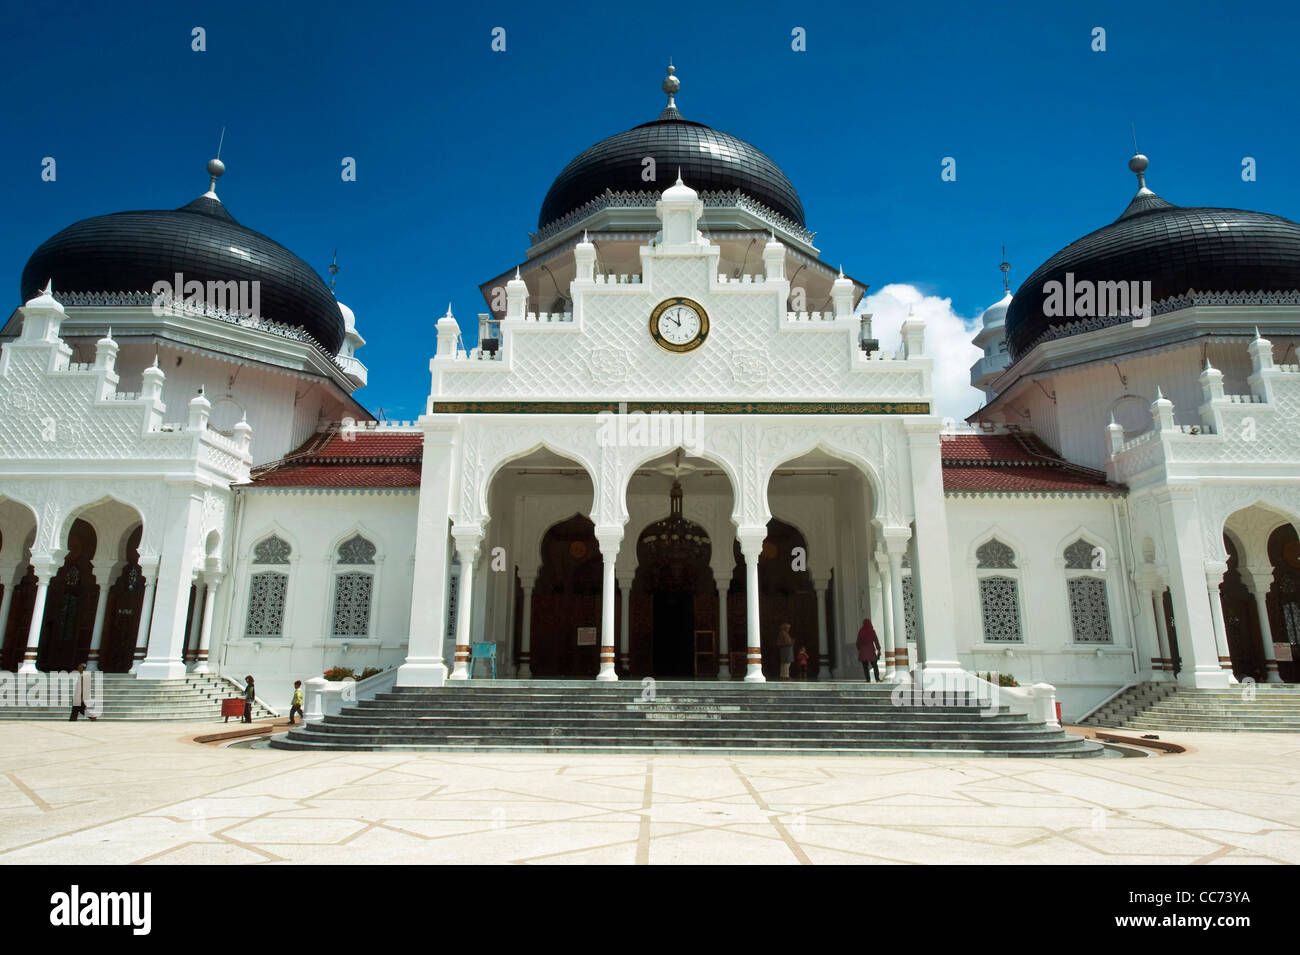 Indonesia, Sumatra, Banda Aceh, Baiturrahman Grand Mosque (Mesjid Raya Baiturrahman) against blue sky Stock Photo